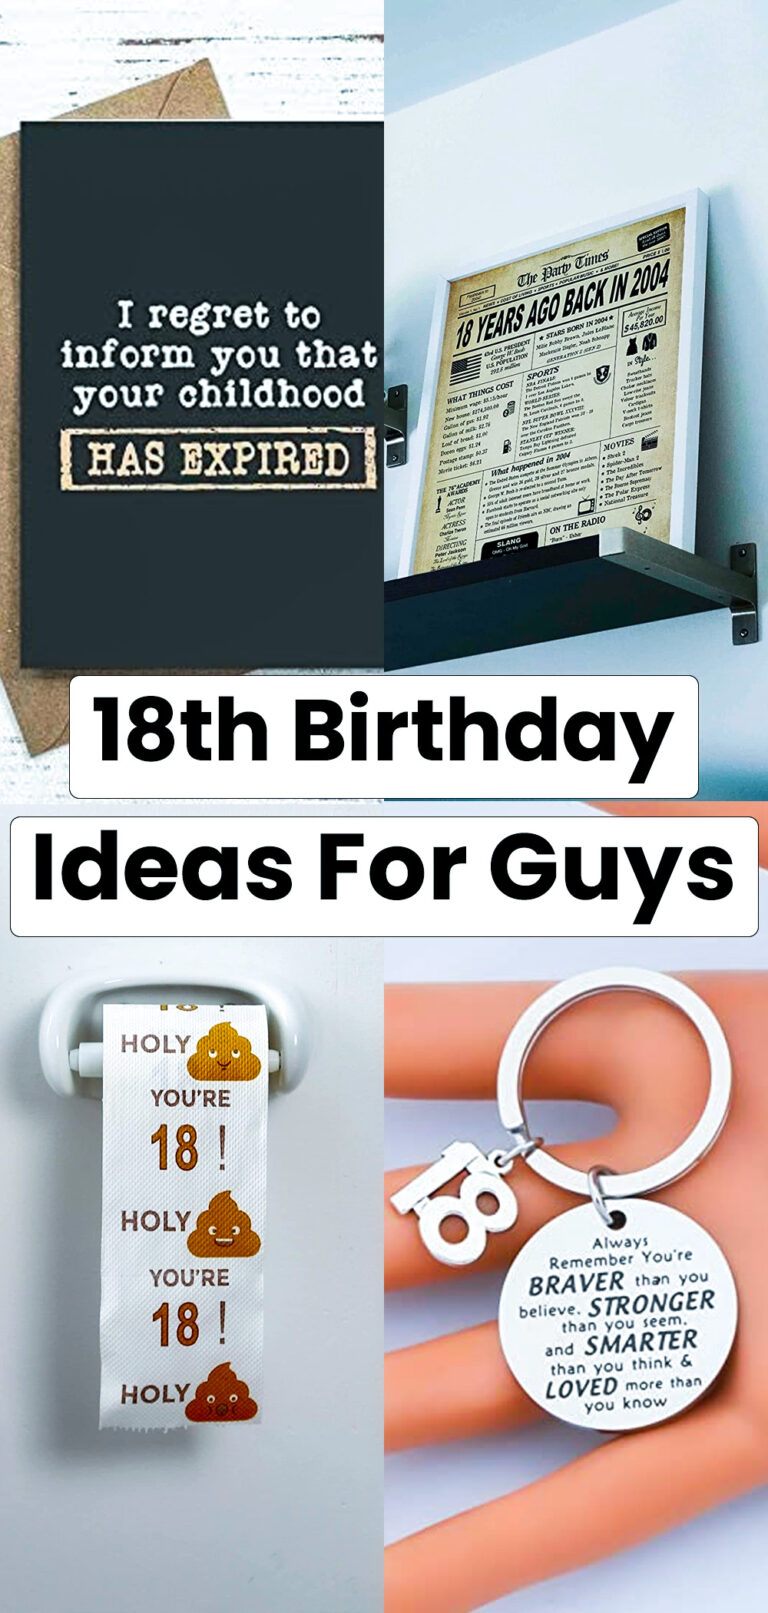 18th Birthday Ideas for Guys